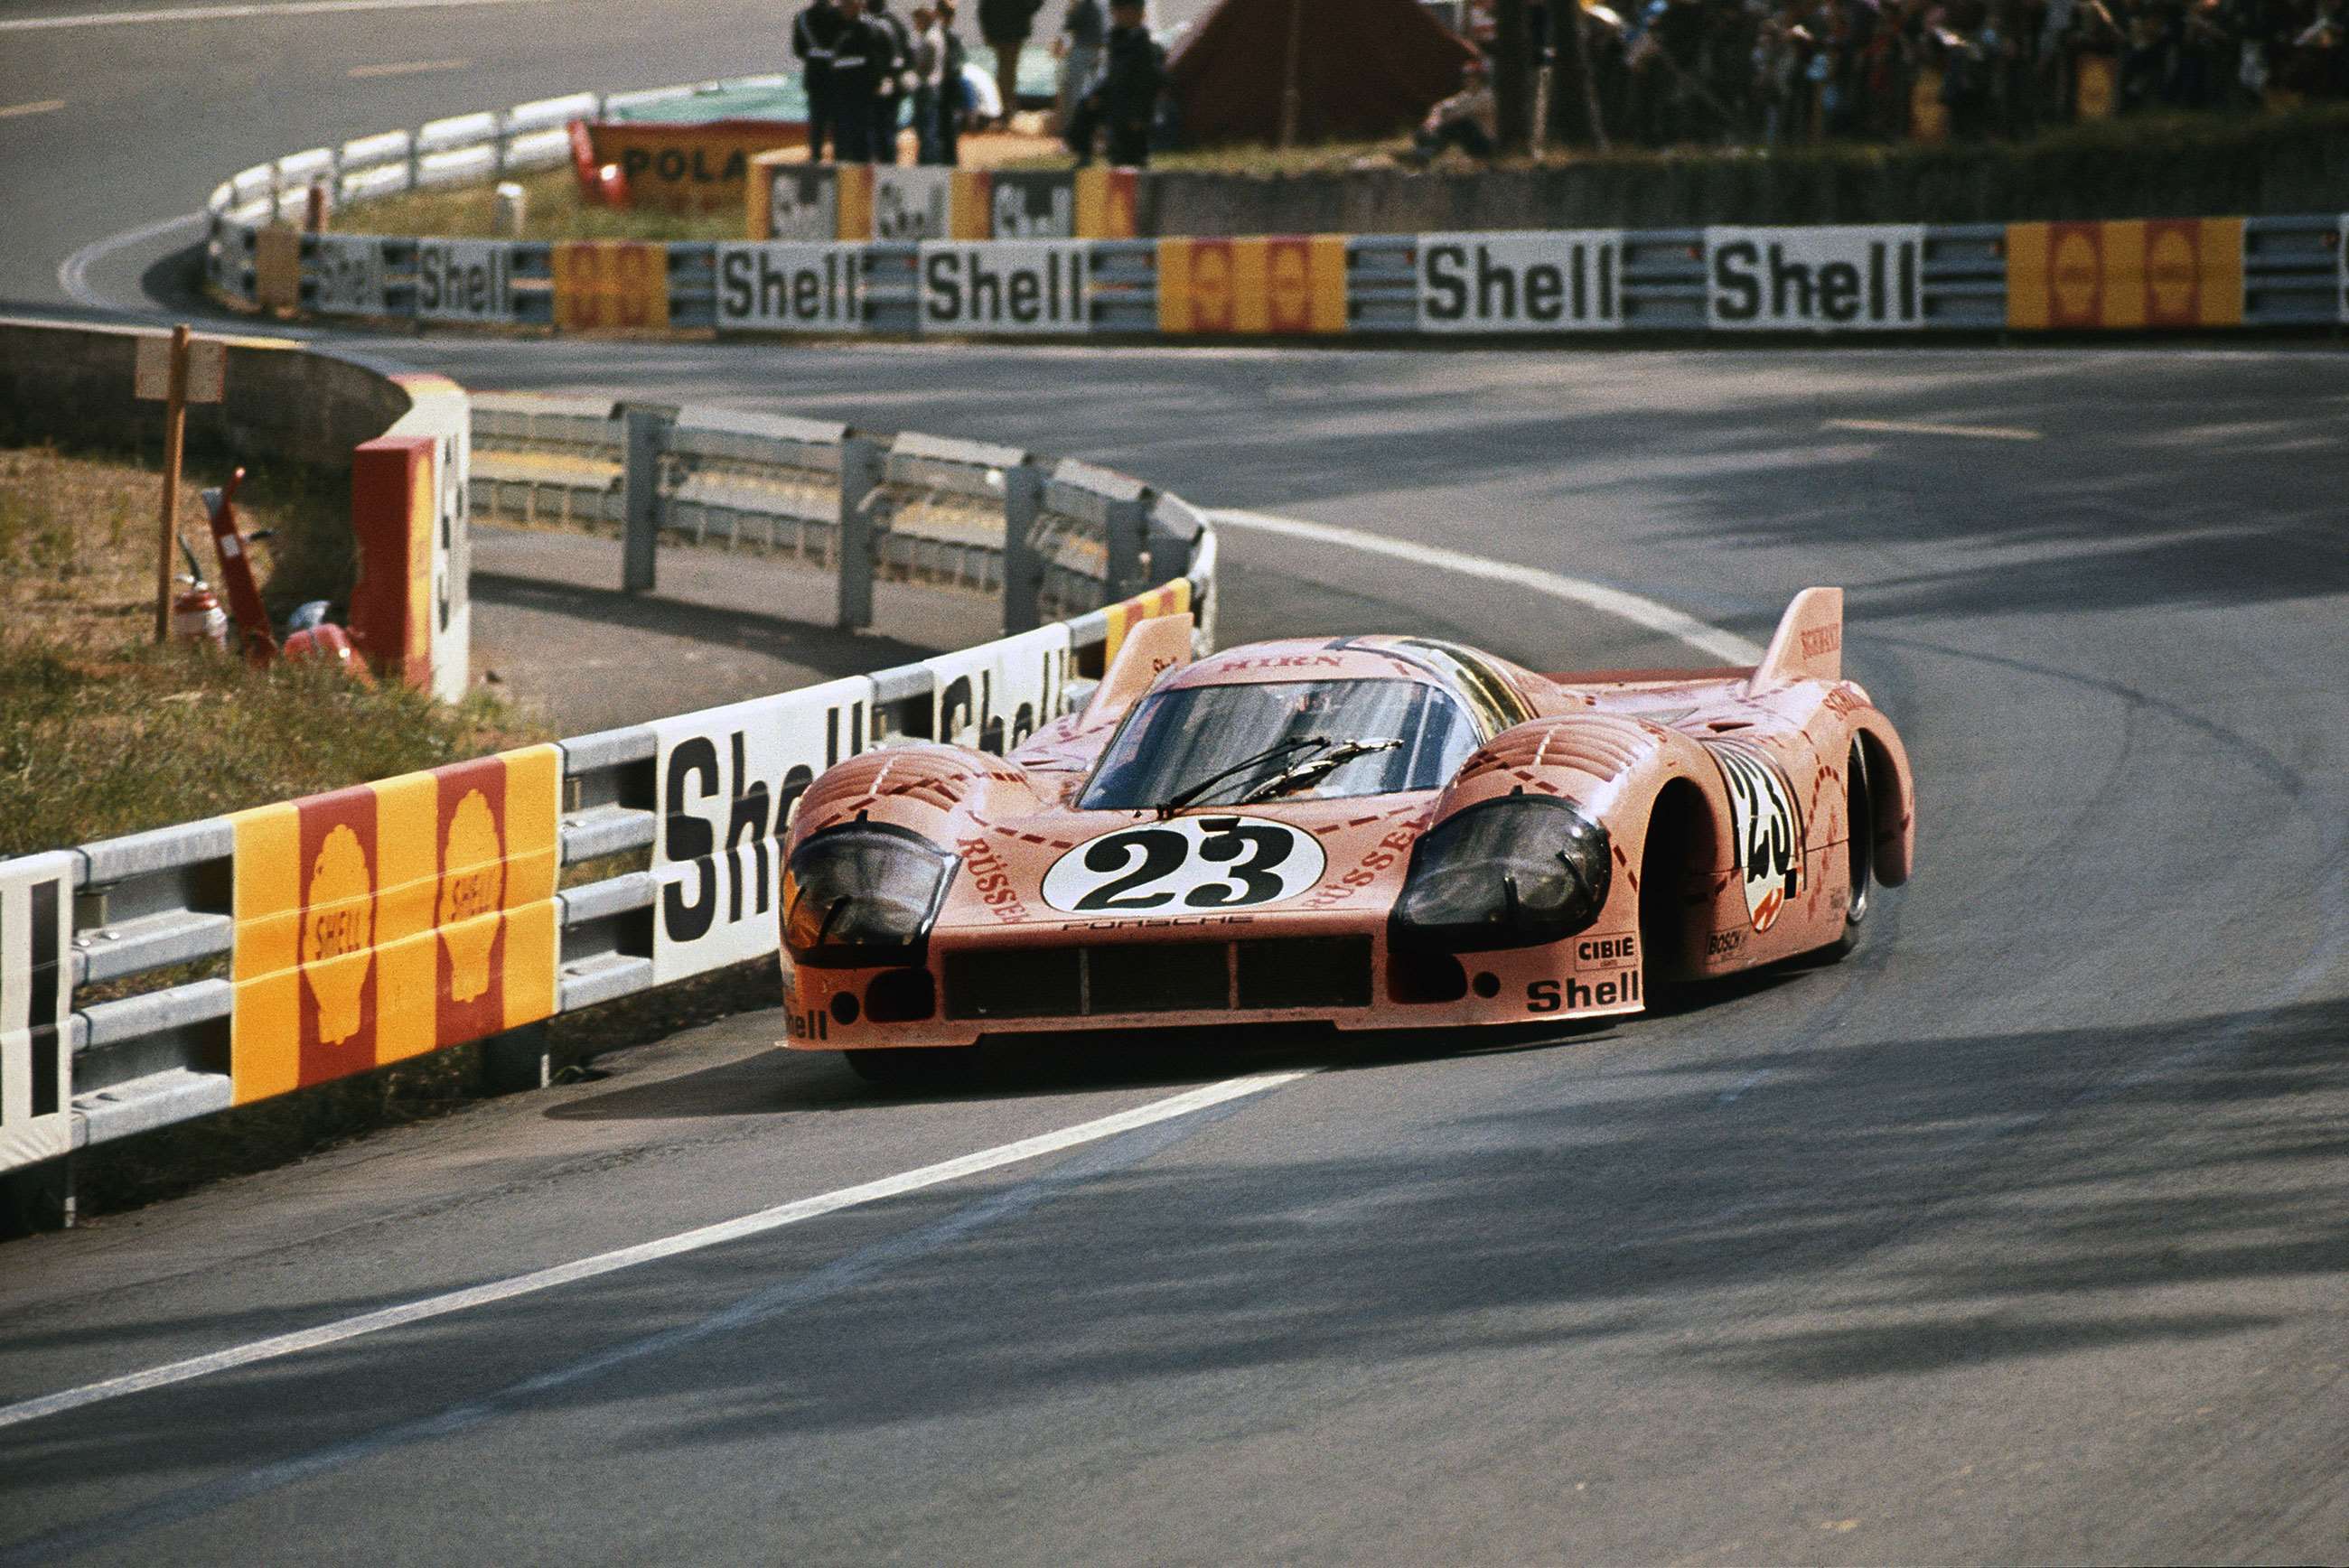 ugliest-racing-cars-5-porsche-917_20-pink-pig-le-mans-24-1971-willy-kauhsen-reinhold-joest-lat-mi-goodwood-29062020.jpg